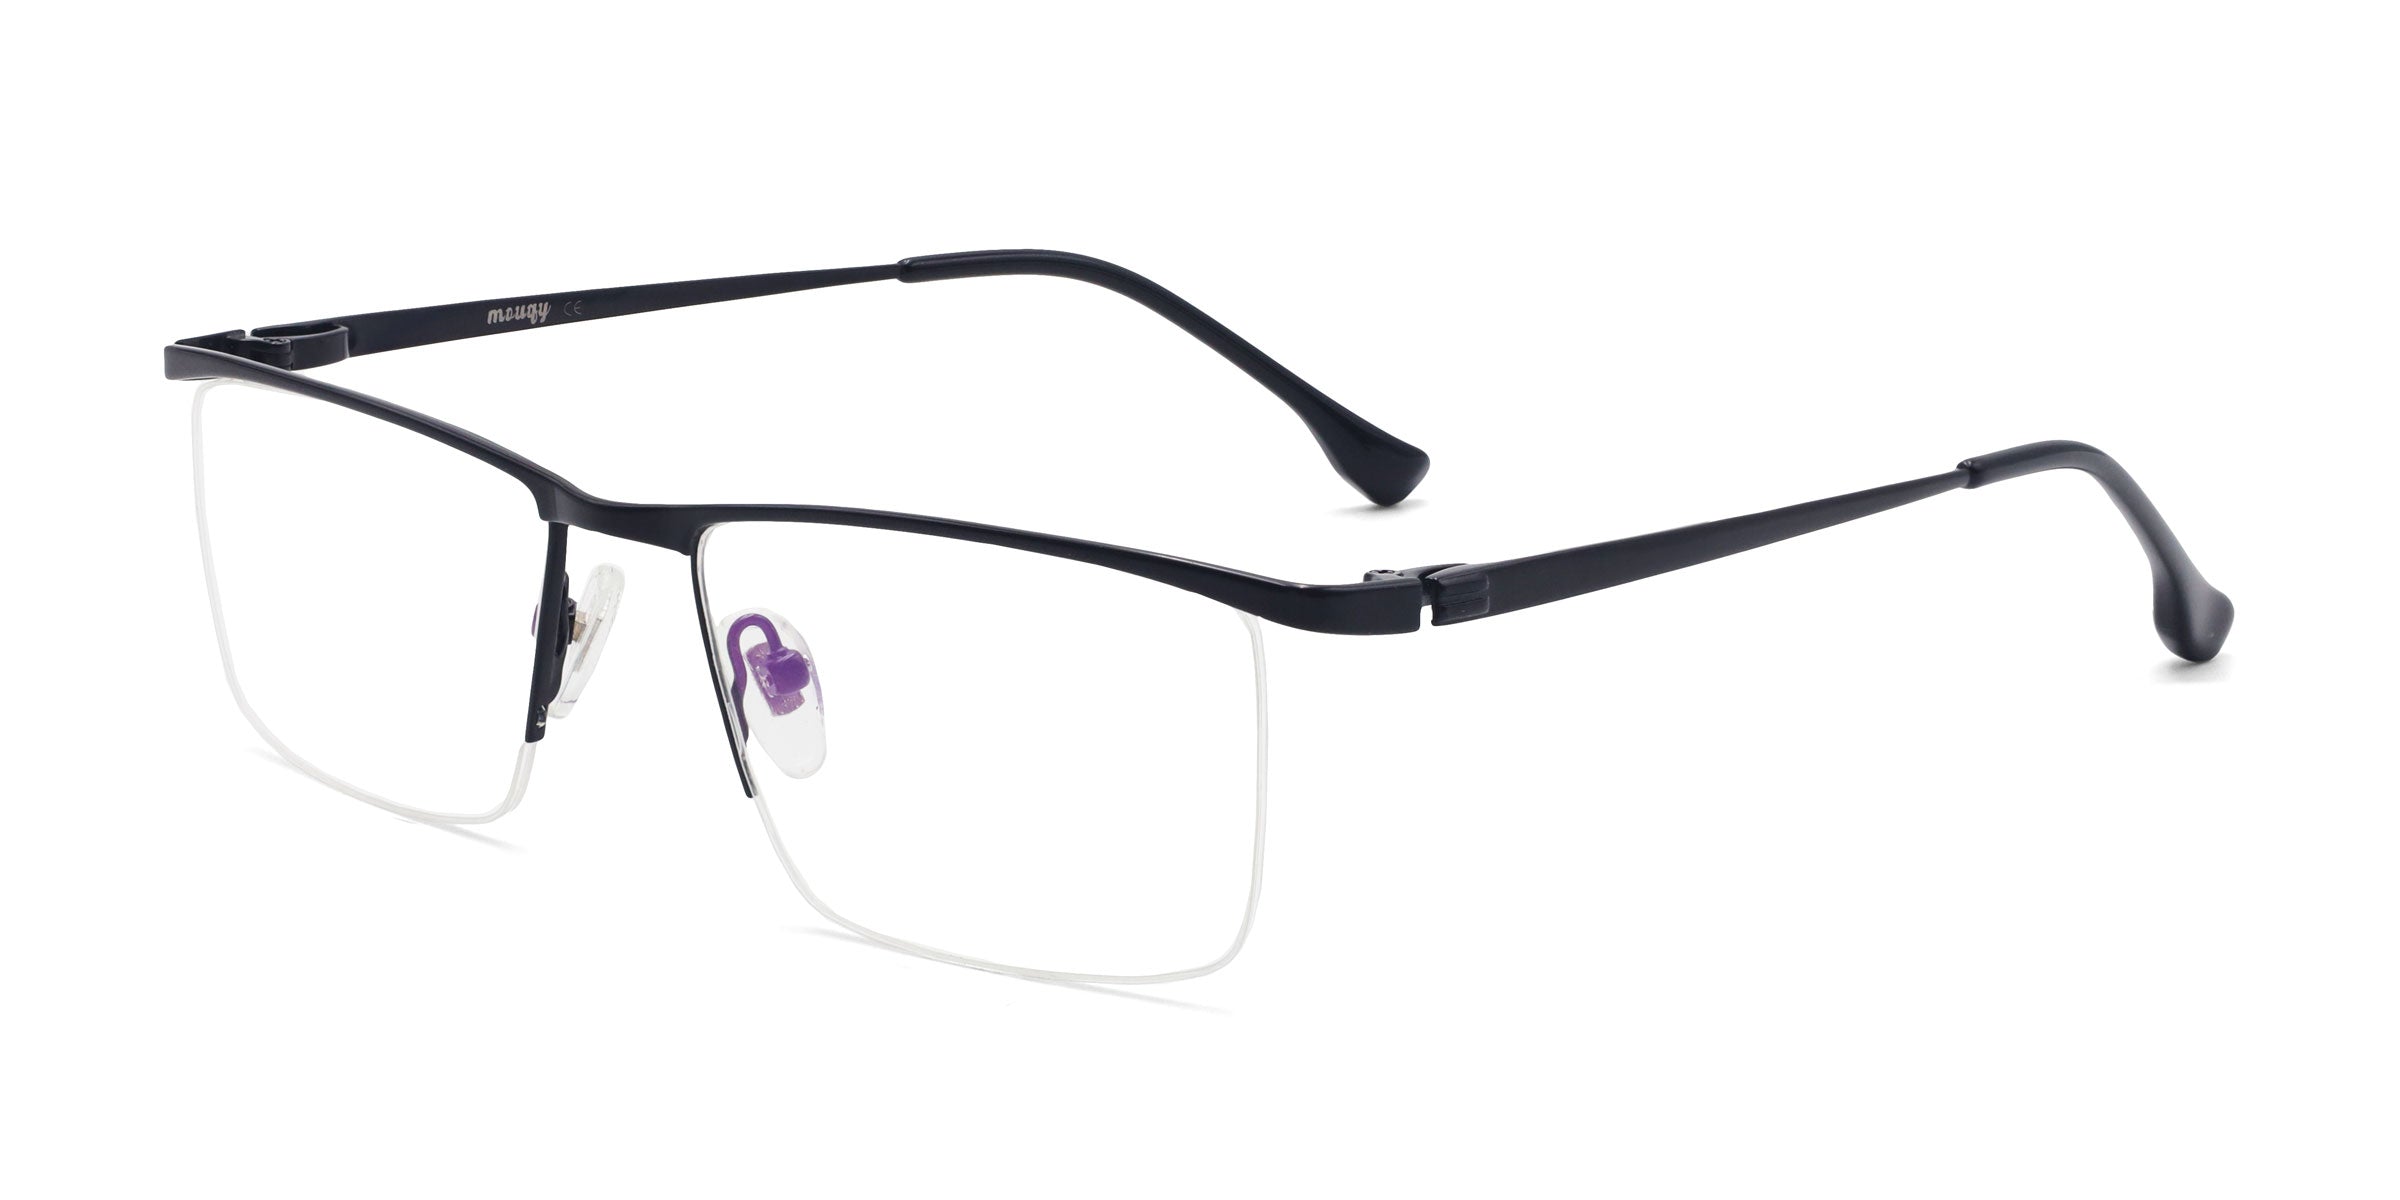 leader rectangle black eyeglasses frames angled view